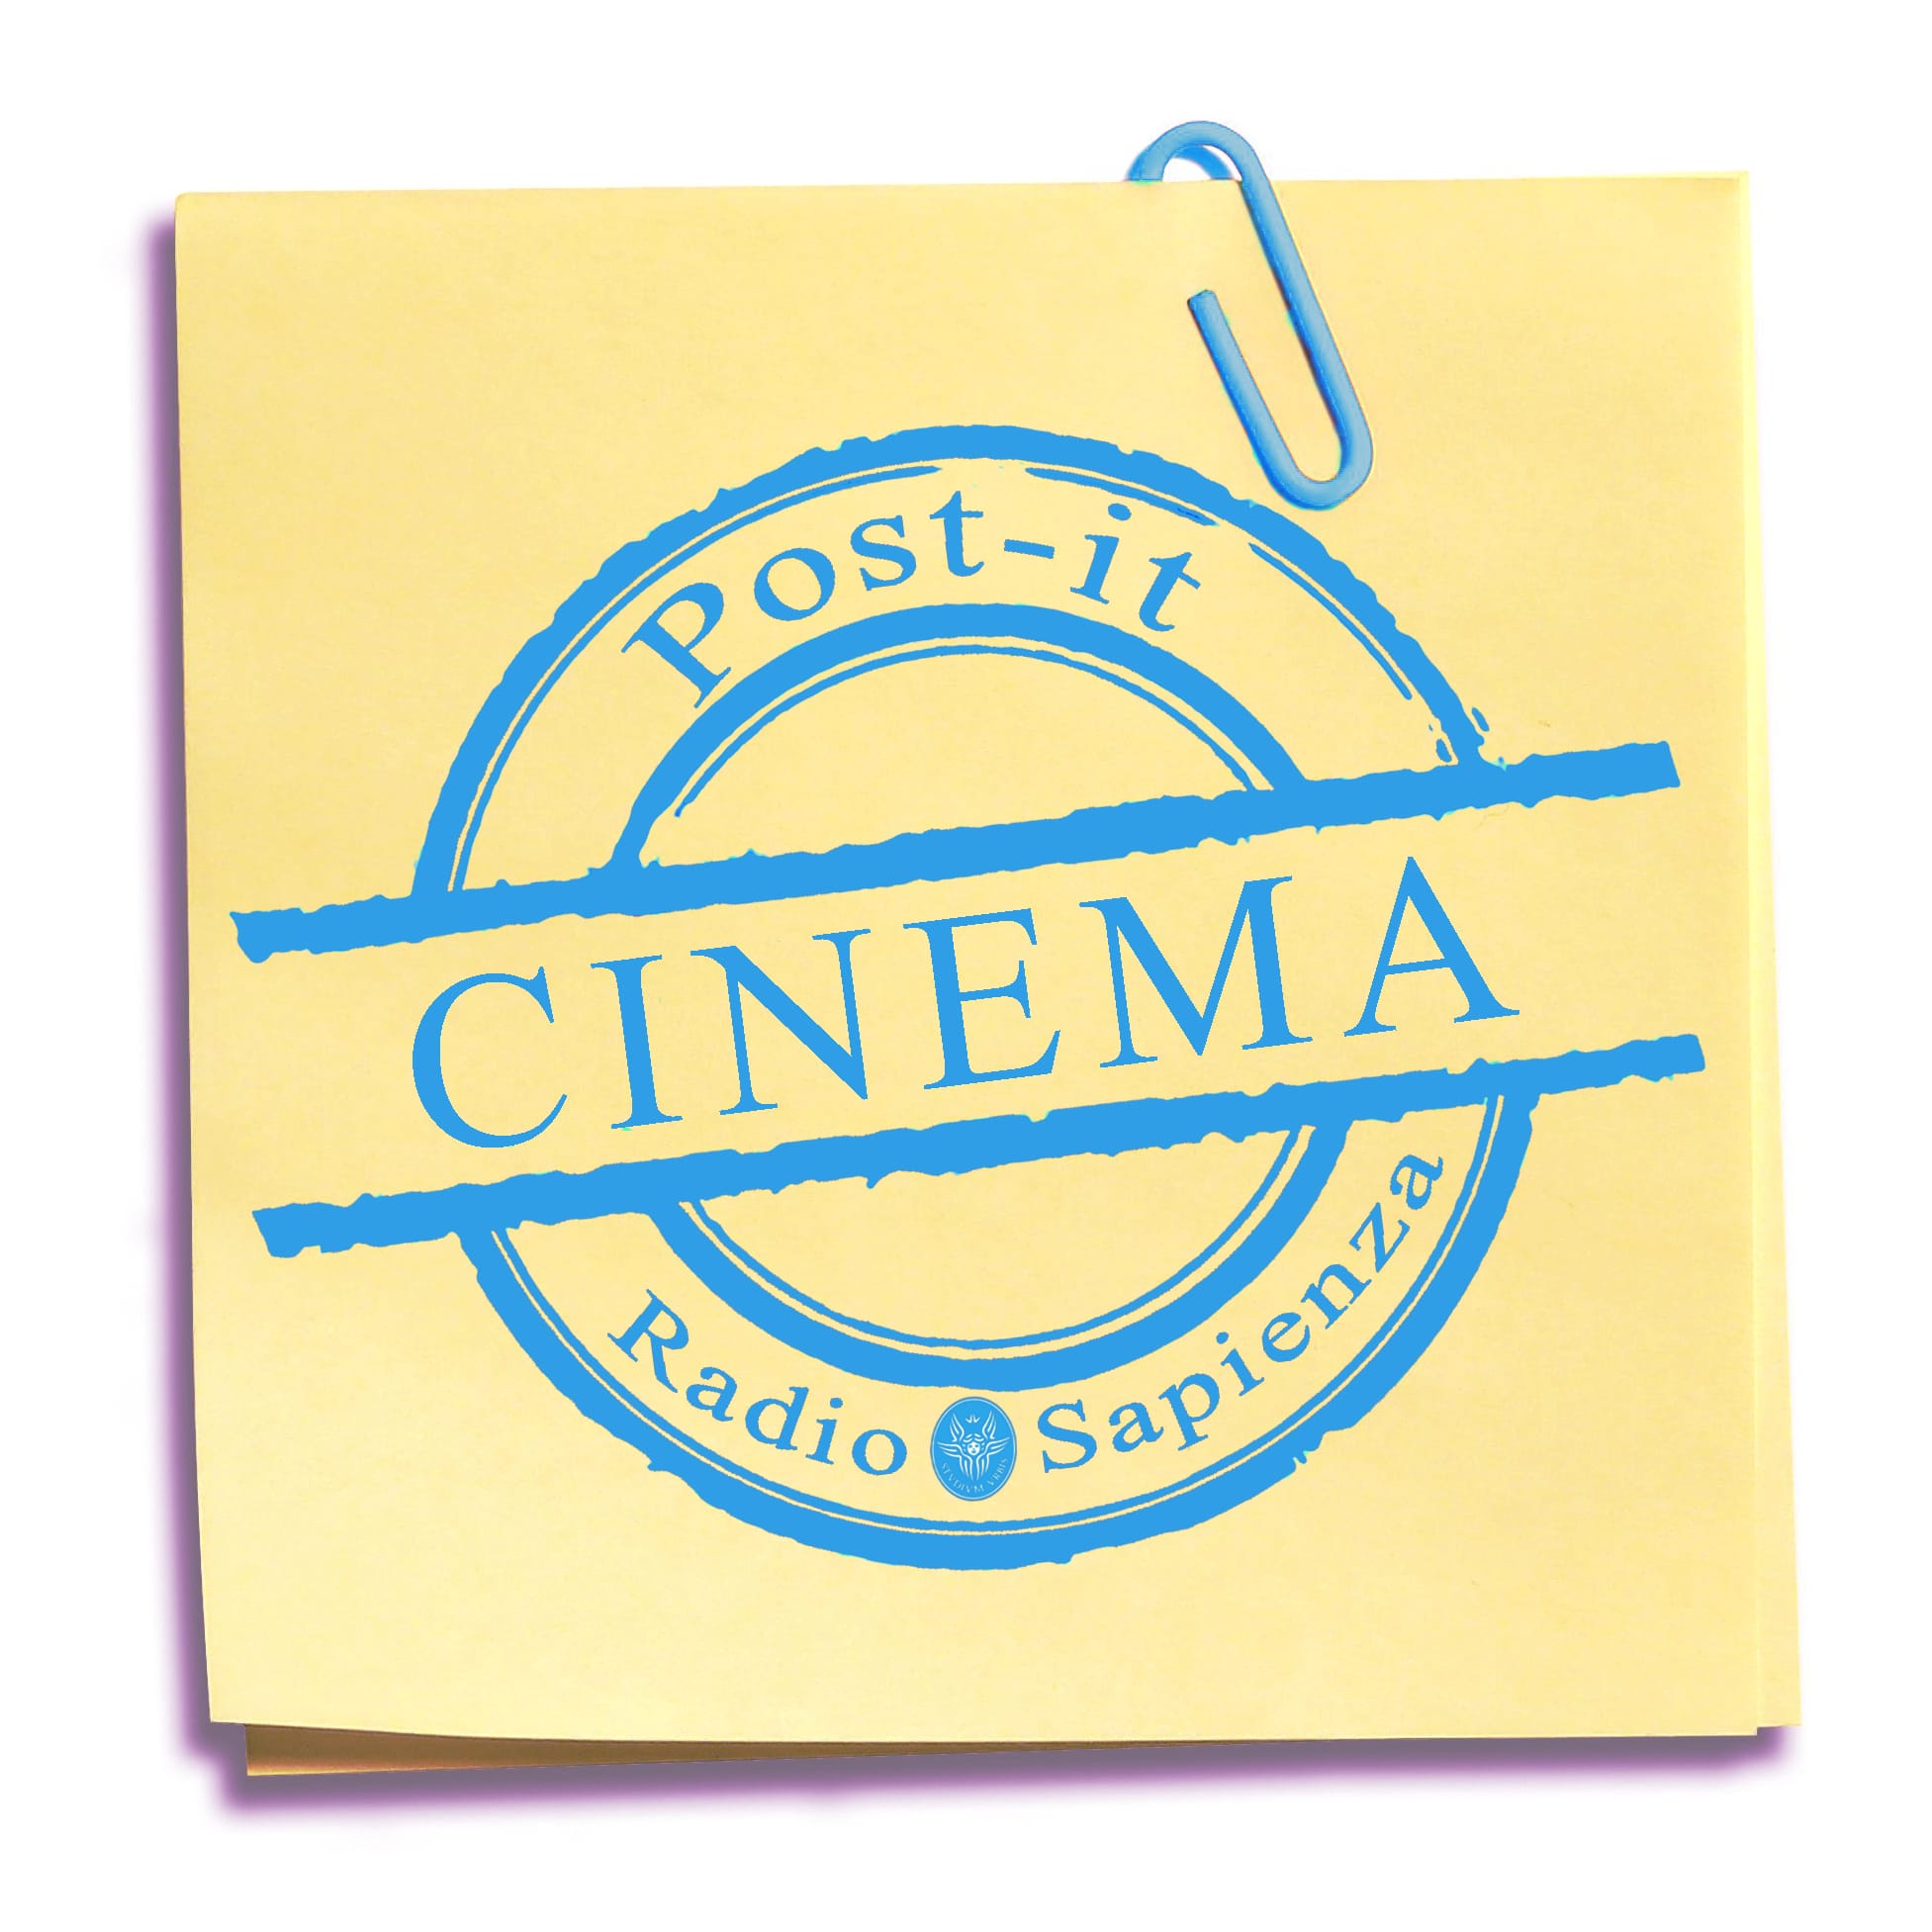 Post-it Cinema – Venerdì 18 Febbraio